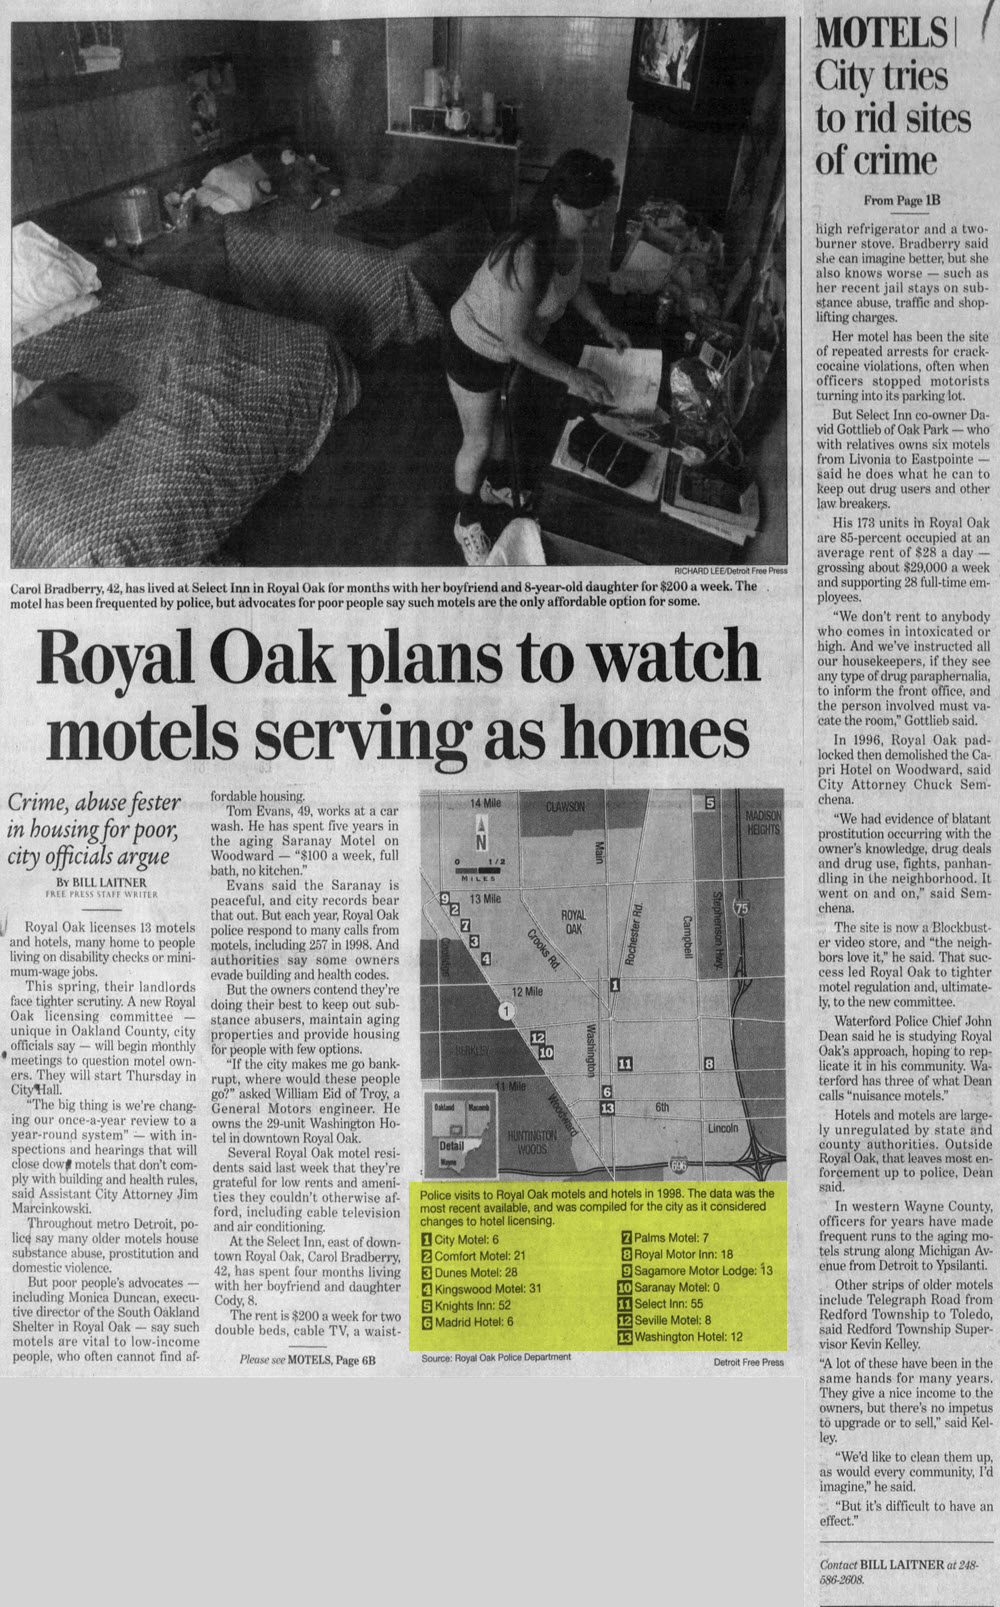 Washington Hotel - June 2000 Article On Motel Situation